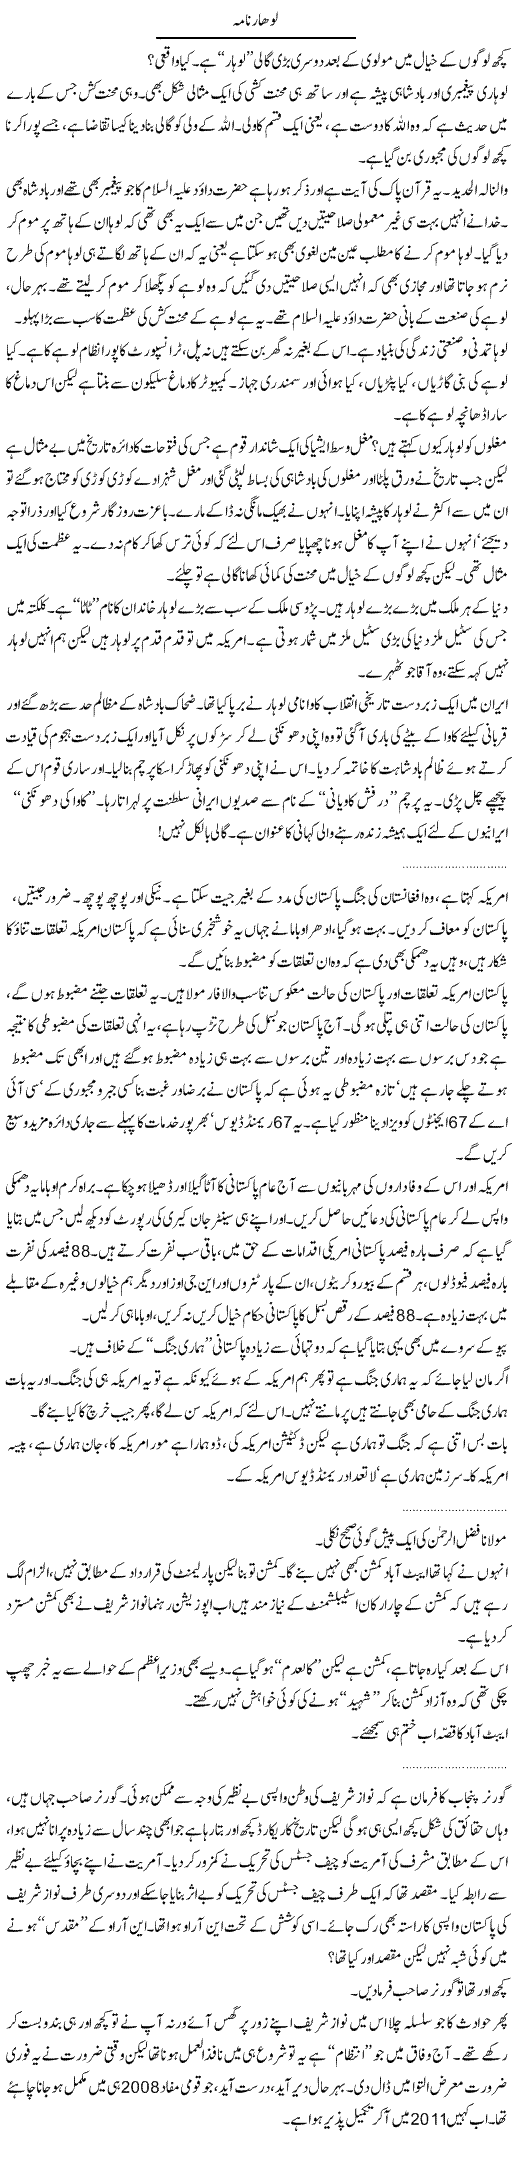 Molvi and Lohar Express Column Abdullah Tariq 25 June 2011